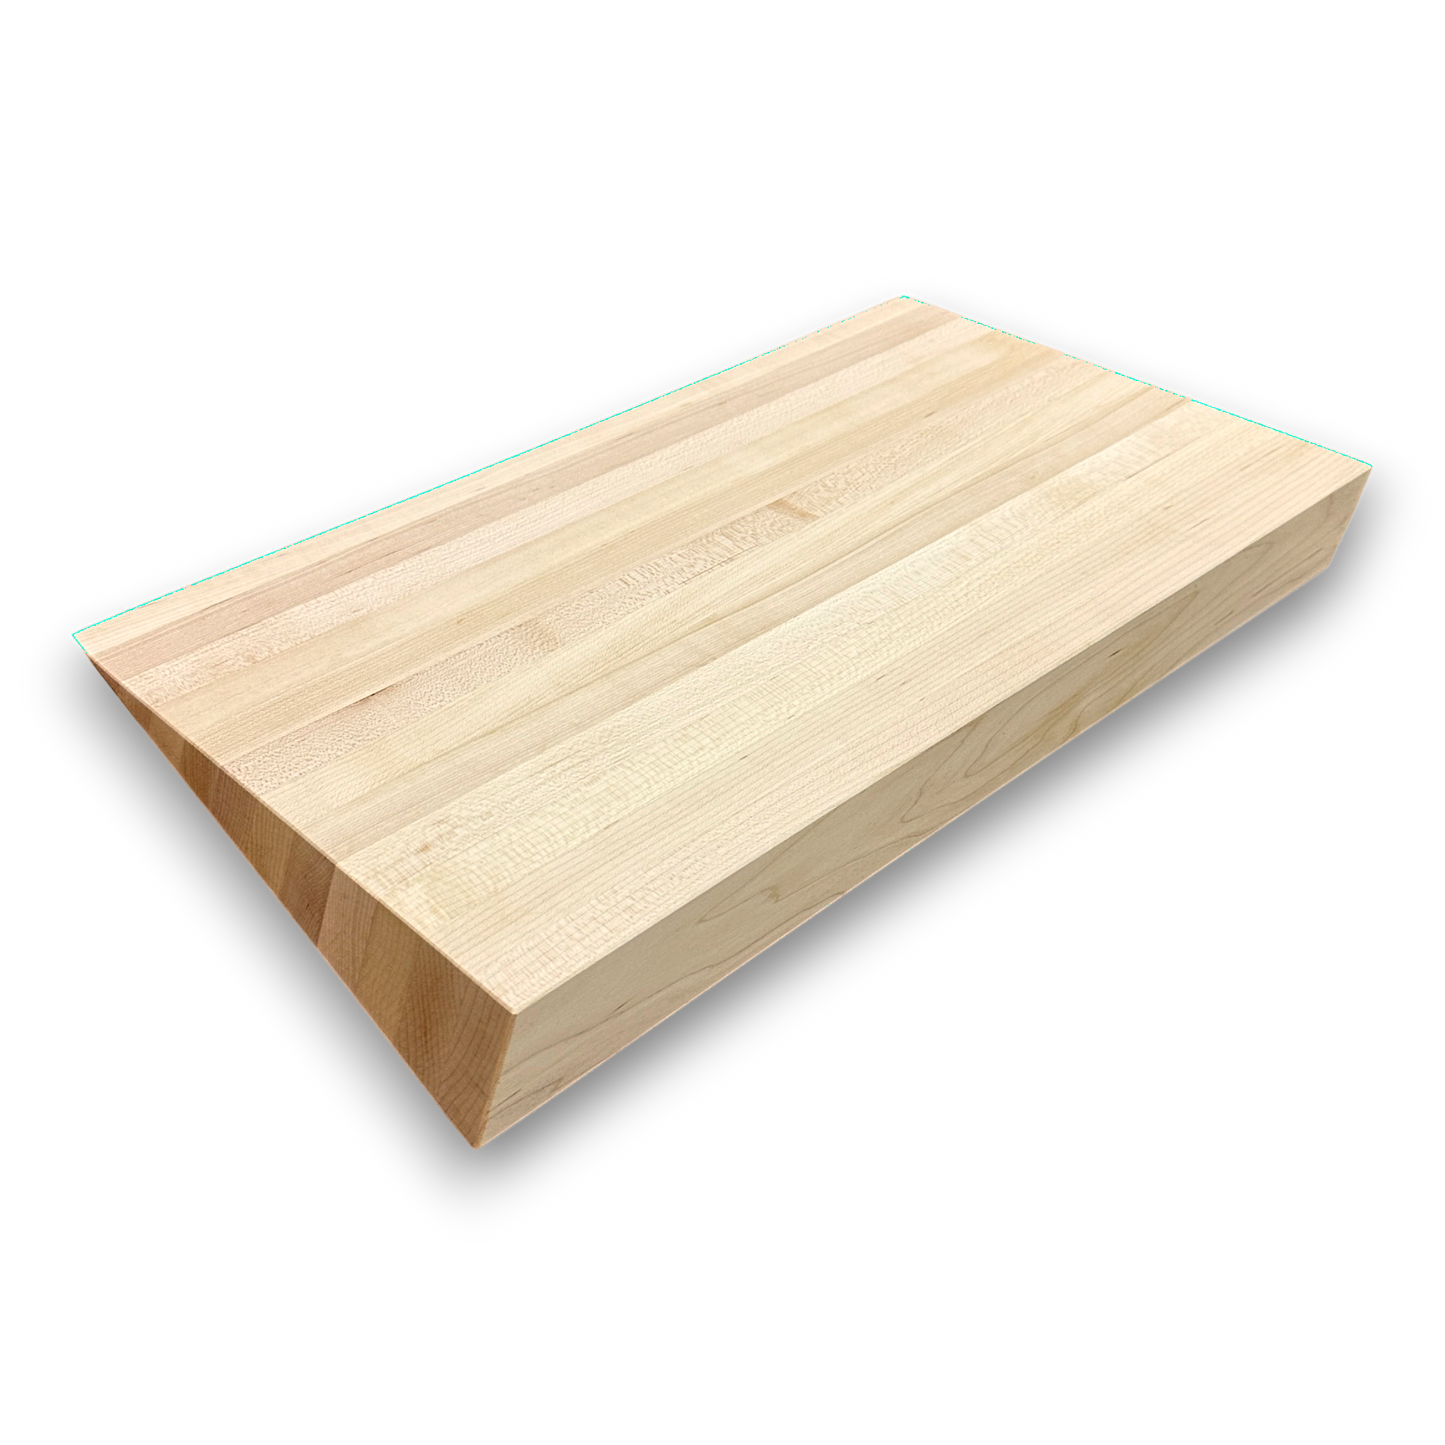 2" Mapley Wood Z-shaped cutting board - BOISWOOD